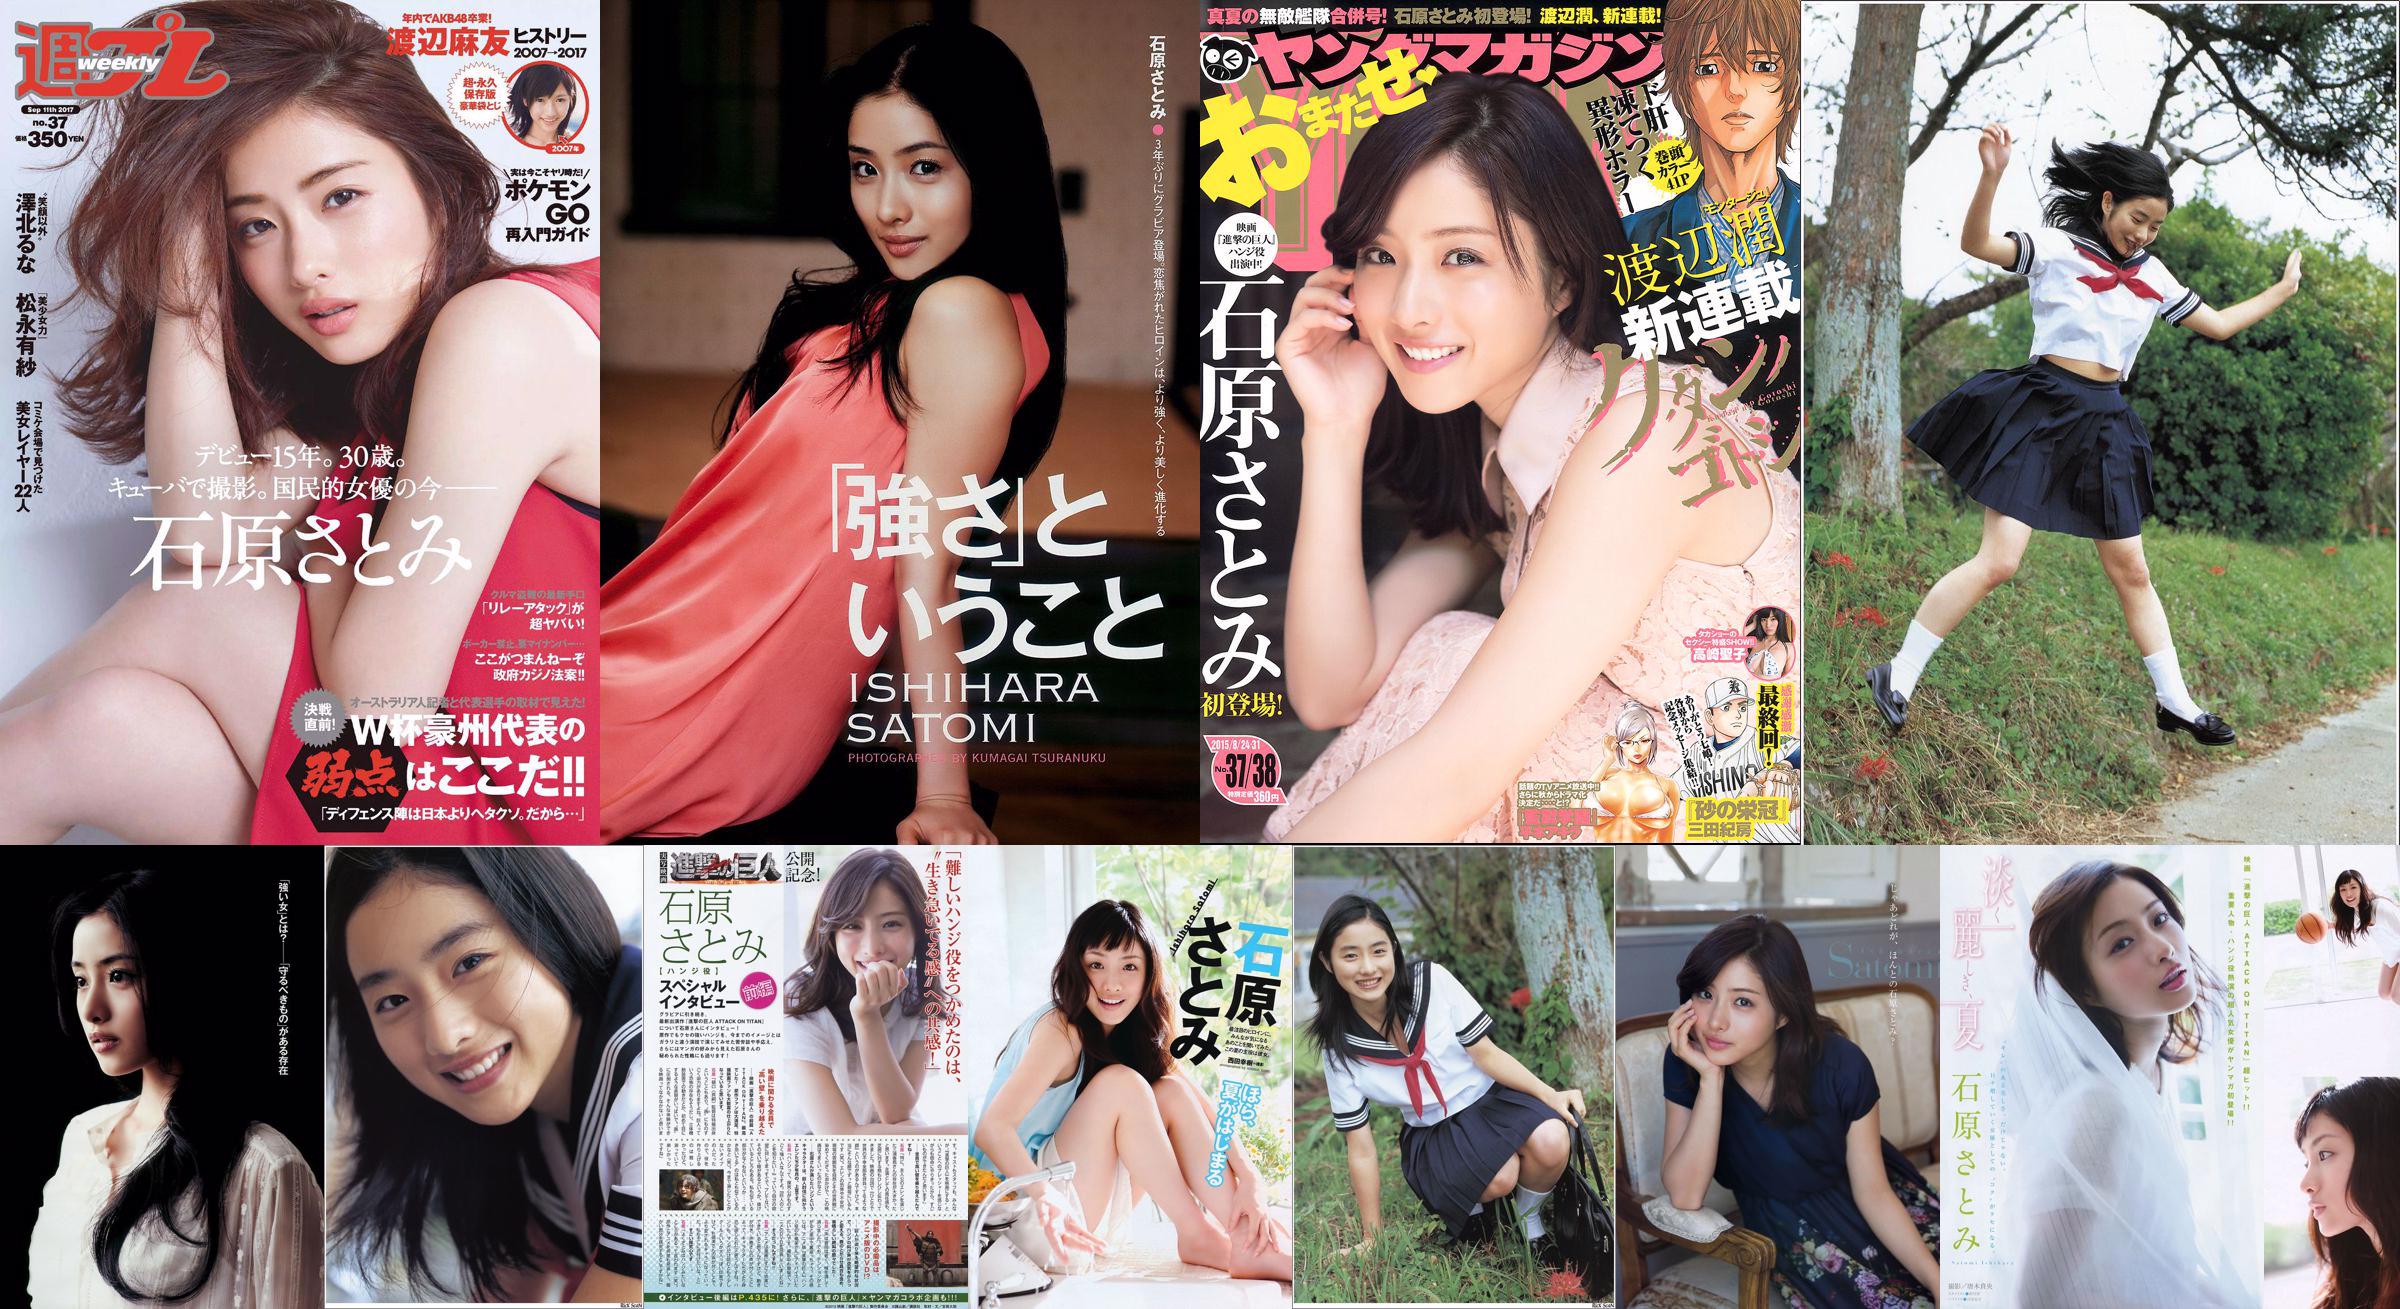 [Young Magazine] Ishihara さとみ Takasaki Seiko 2015 No.37-38 Photo Magazine No.720166 Pagina 1